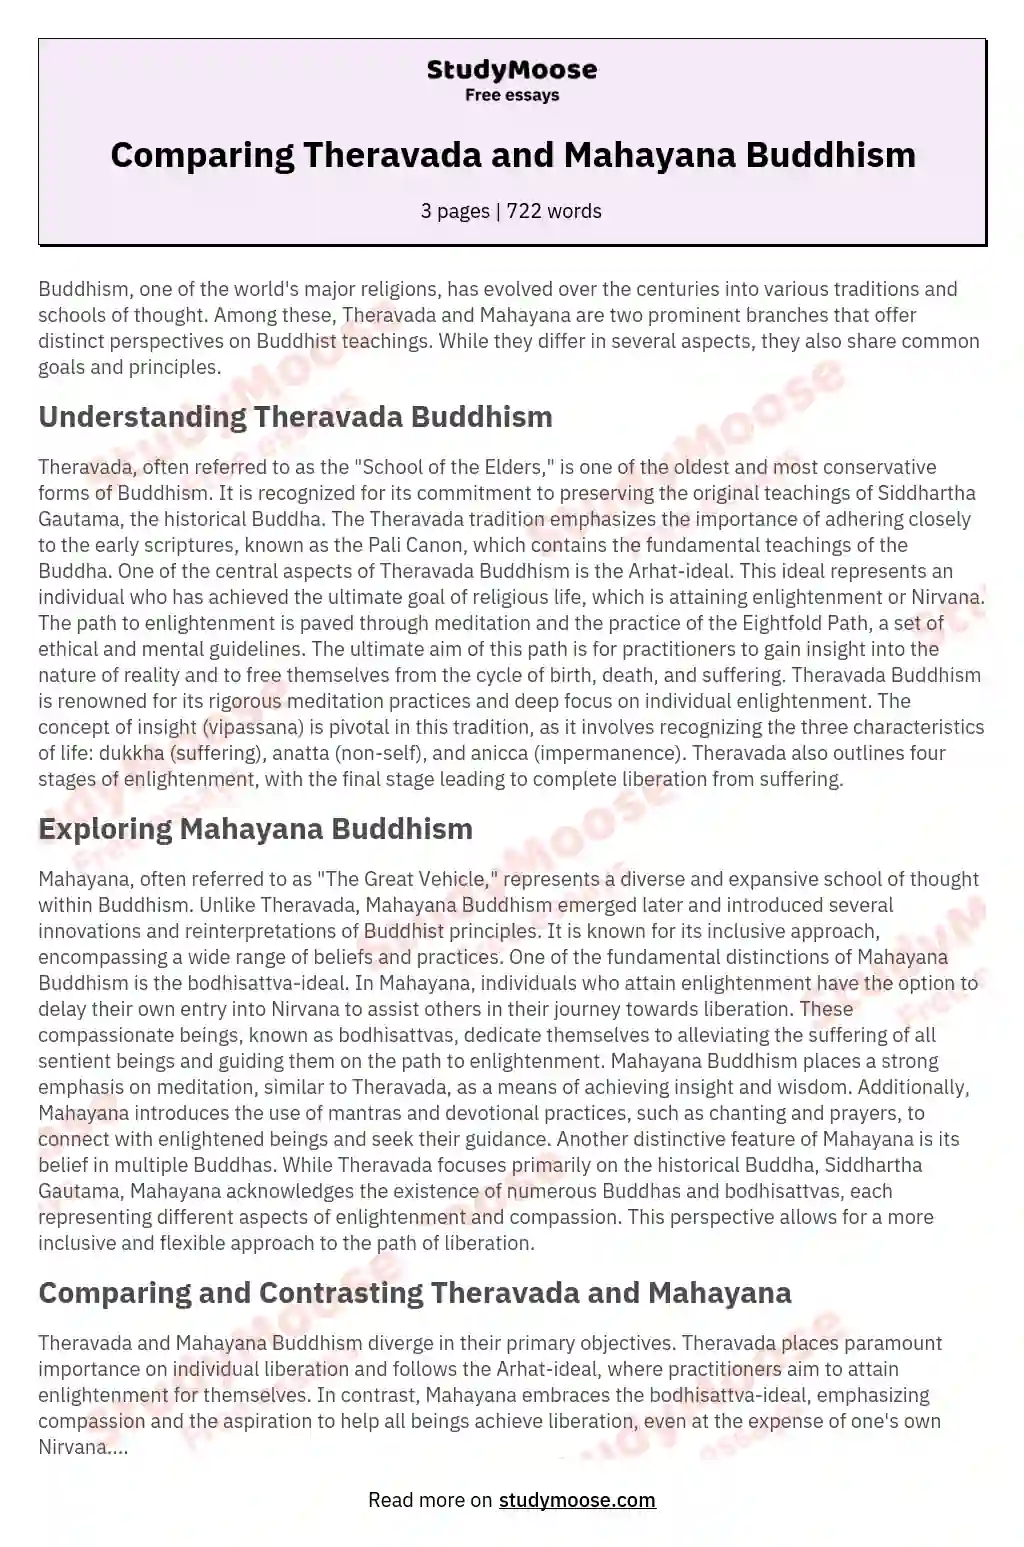 Mahayana and Theravada as Teachings of Buddhism